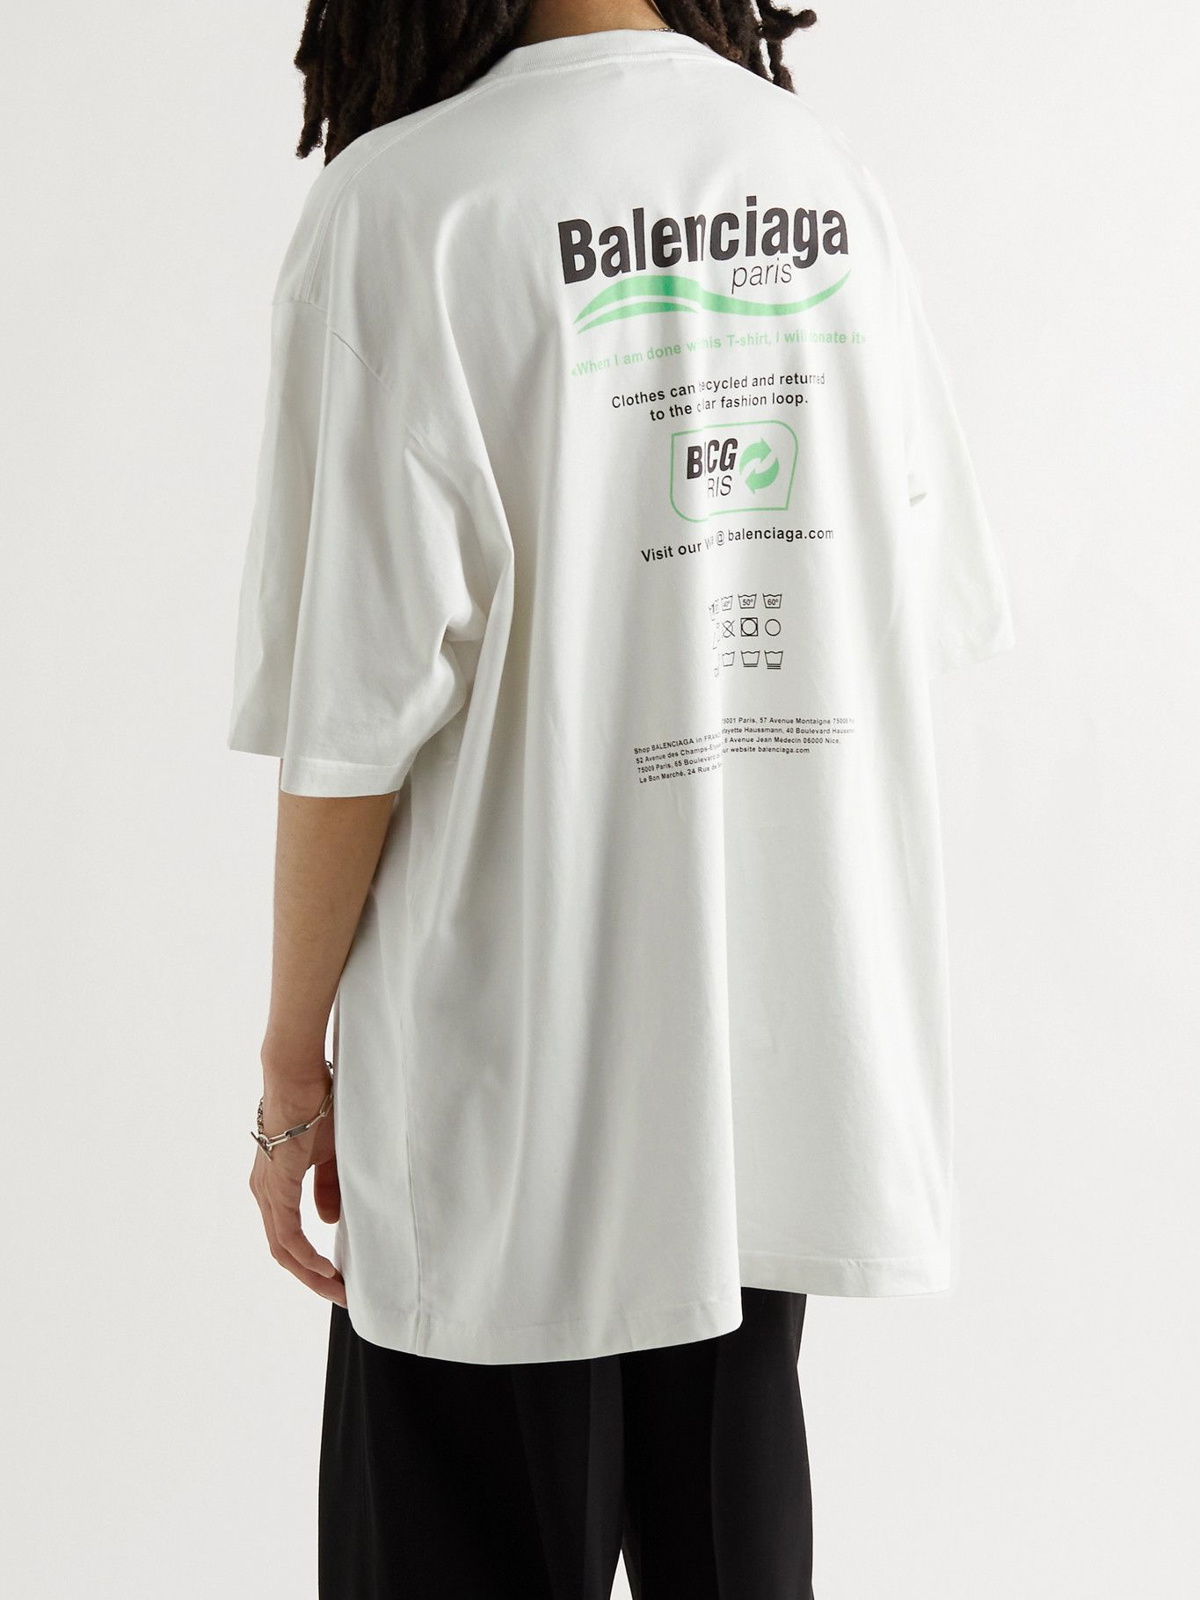 bon marche white & black patterned top/t shirt 24